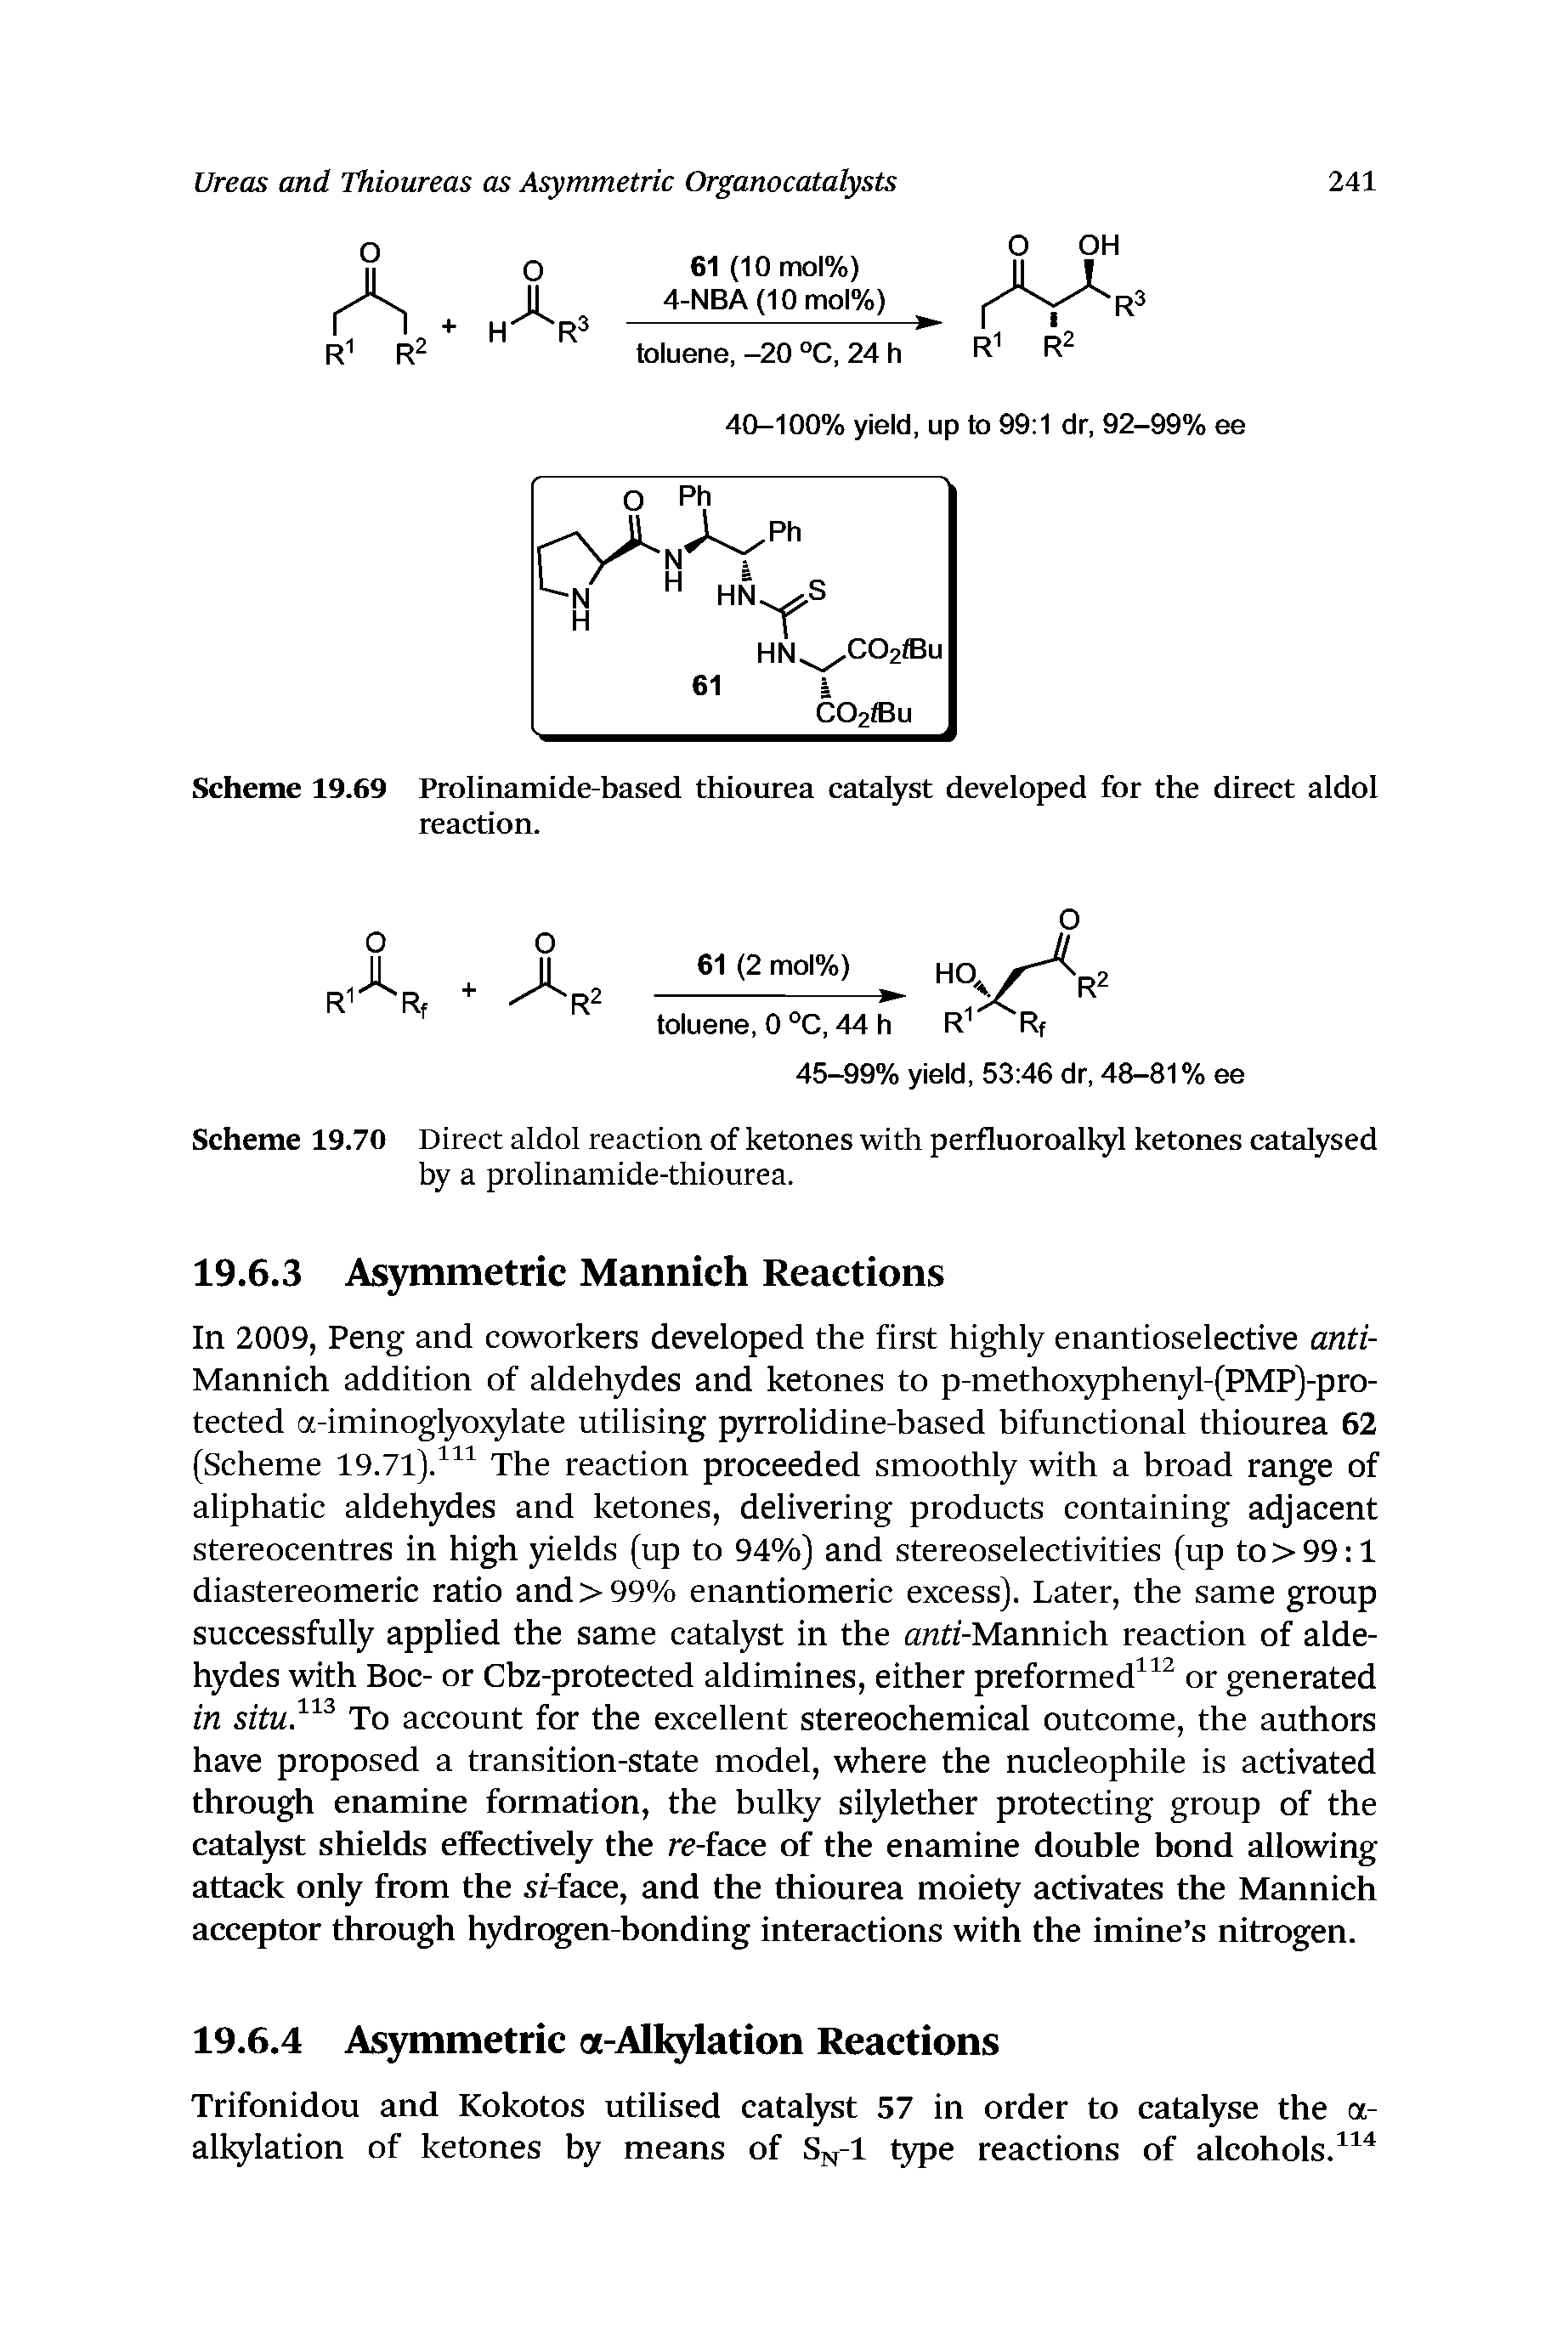 Scheme 19.69 Prolinamide-based thiourea catalyst developed for the direct aldol reaction.